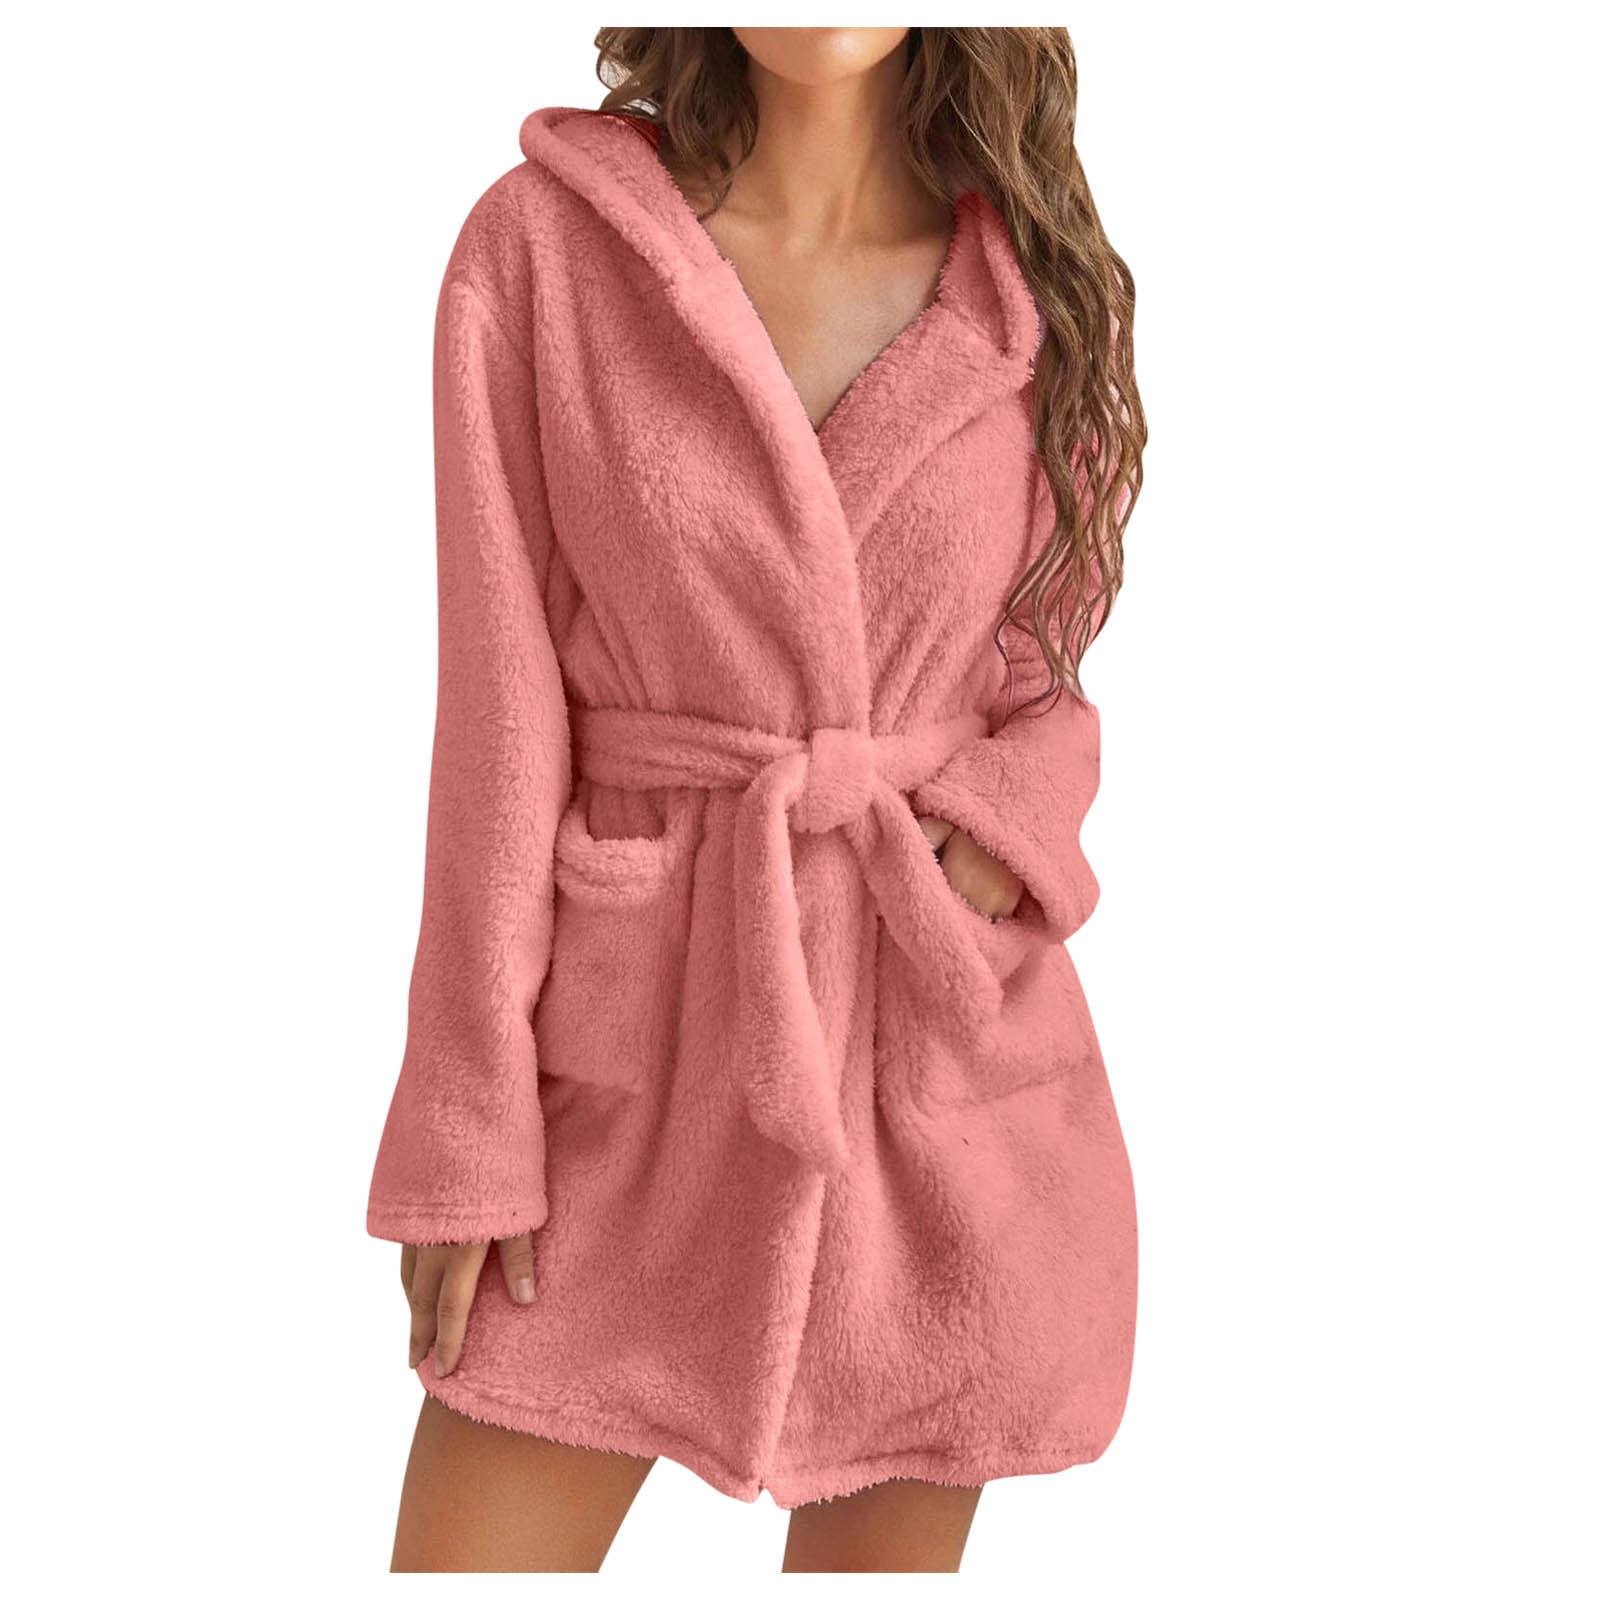 YanHoo Women Bathrobe Towel Plush Fluffy Terry Cloth Lightweight Robe Winter Warm Fleece Bath Gown Soft Ladies Spa Shower Walmart Prime Sale 0c936295 74d3 4437 8060 af2e13ea387d.2f6402b1f7531bc98f71bf70f91e4a2f